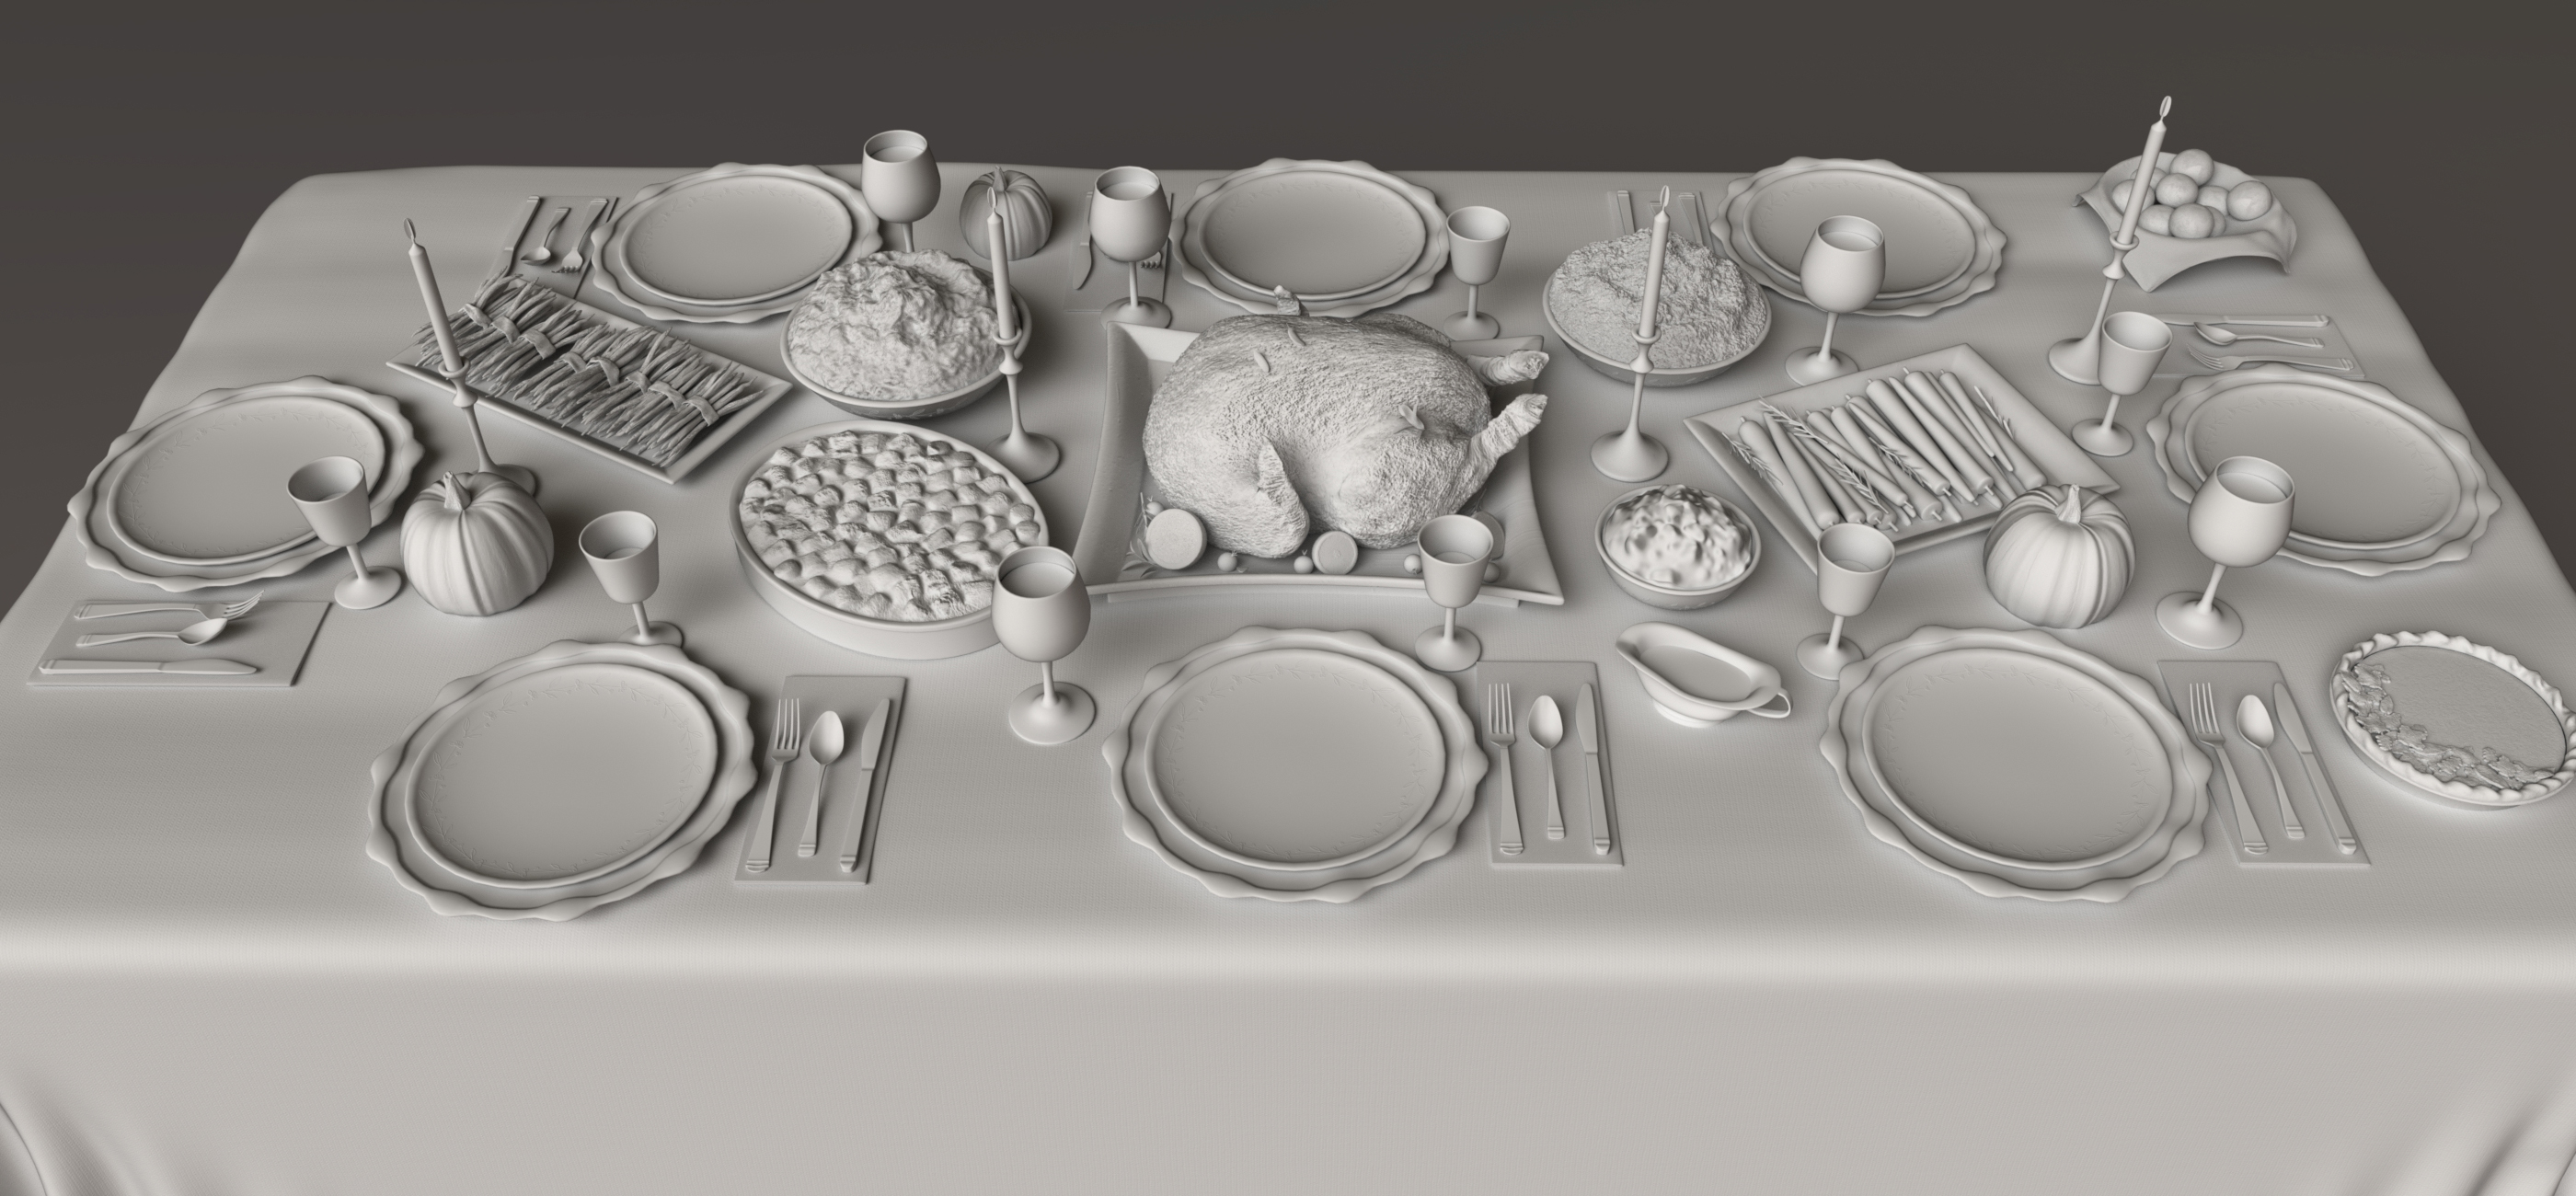 Harvest Feast by: SR3, 3D Models by Daz 3D